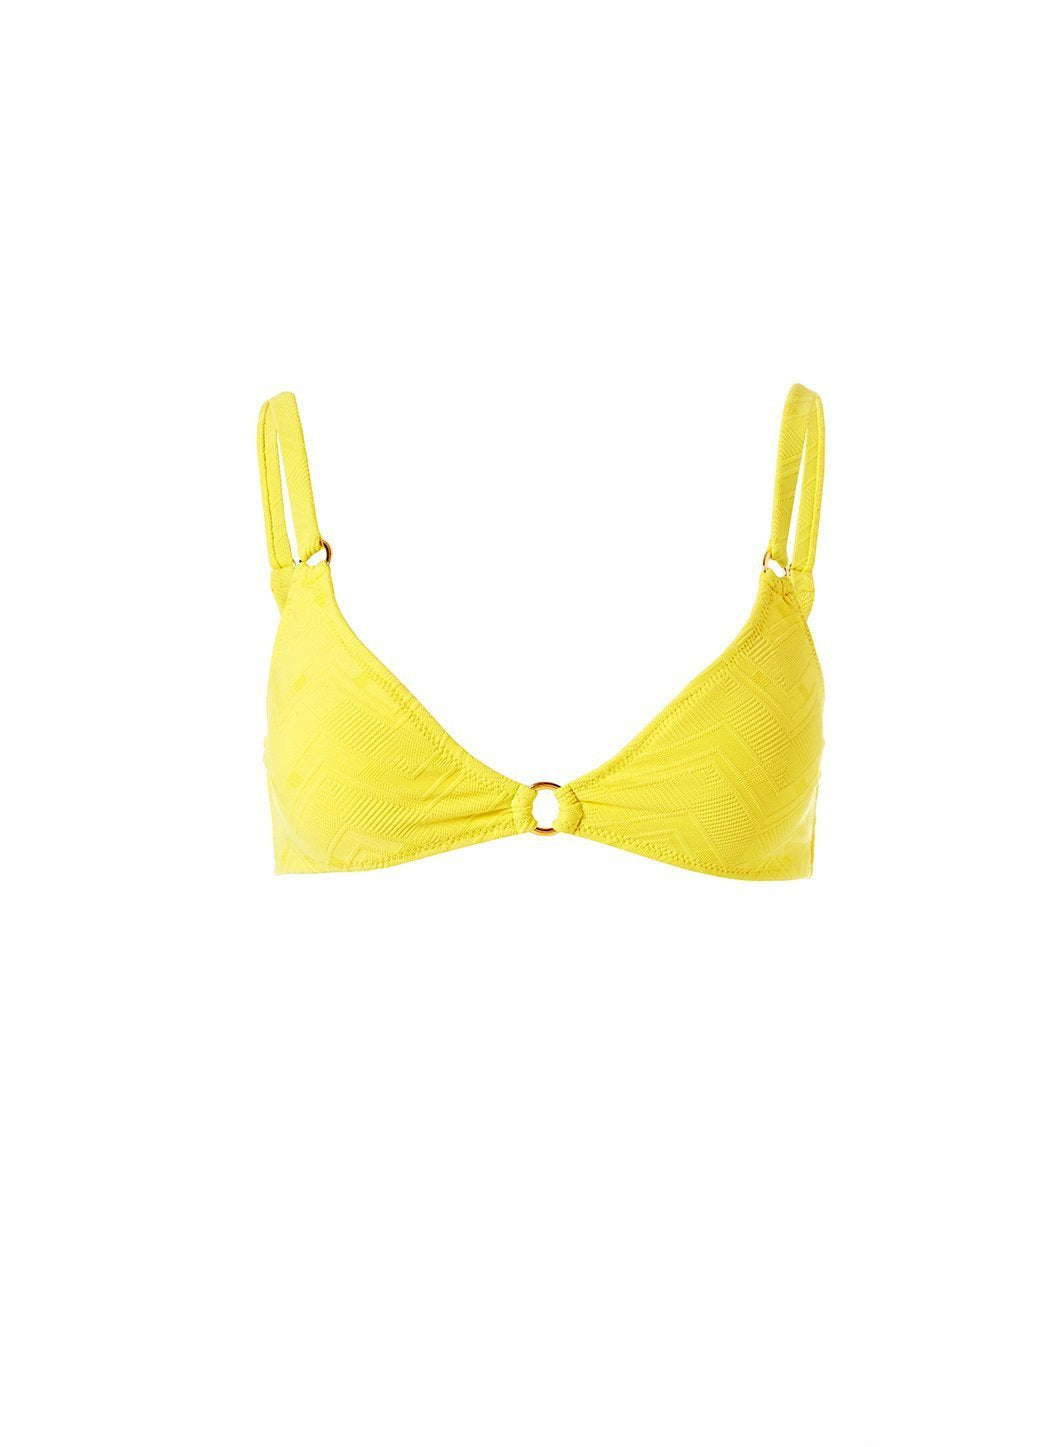 Montenegro Lemon Zigzag Bikini Top Cutout 